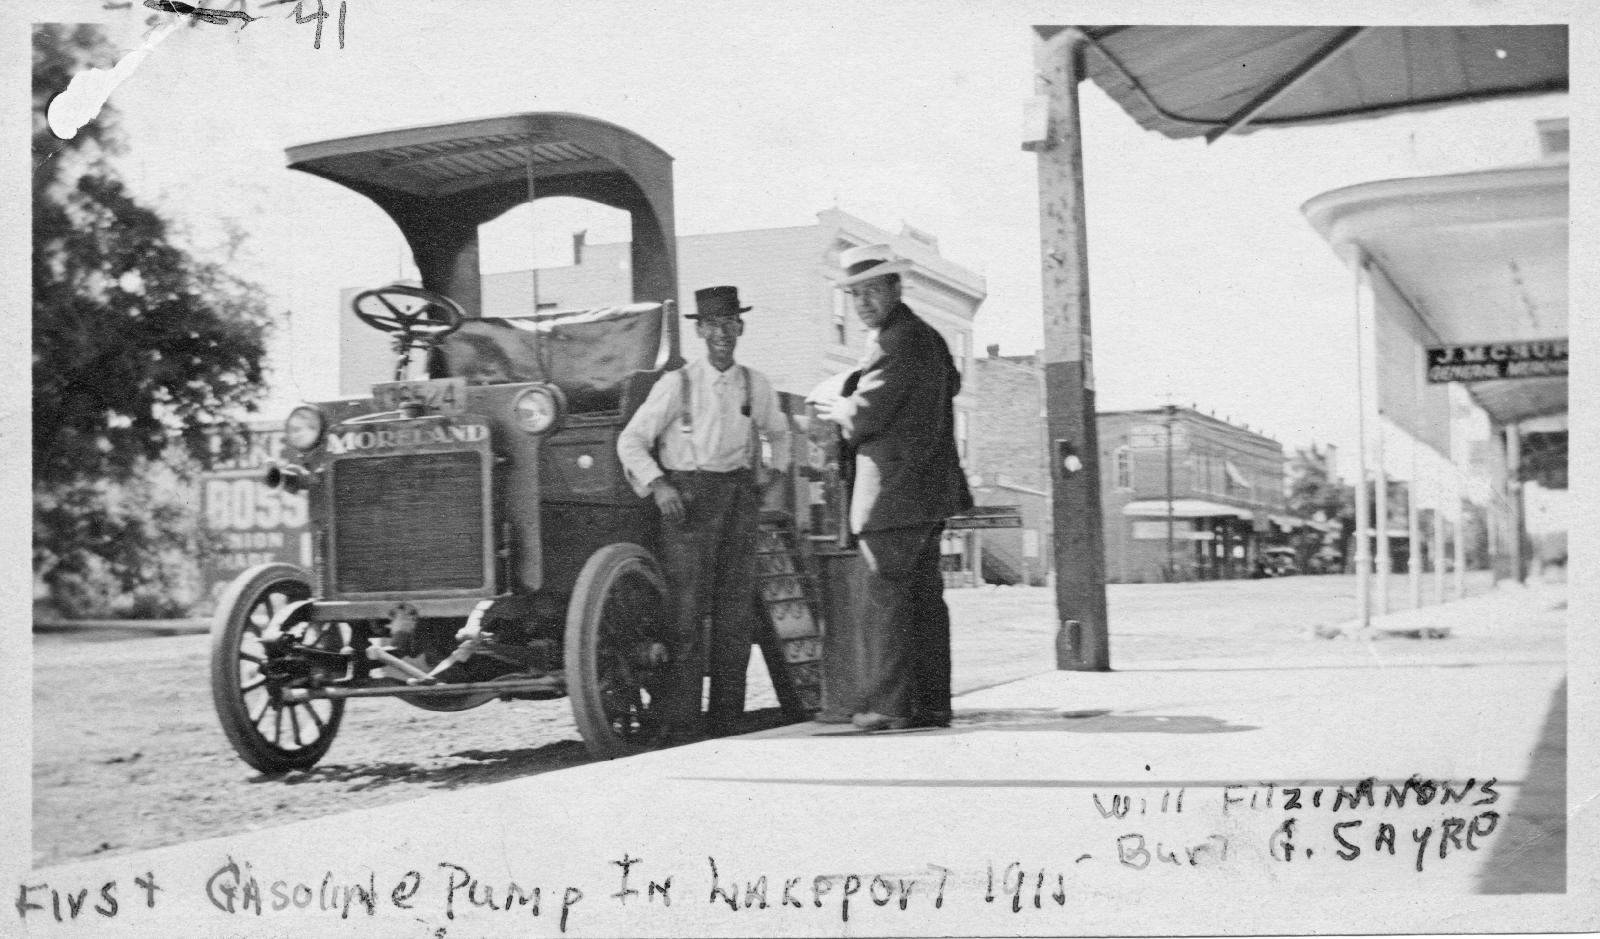 1st gasoline pump in Lakeport 1915 Main St